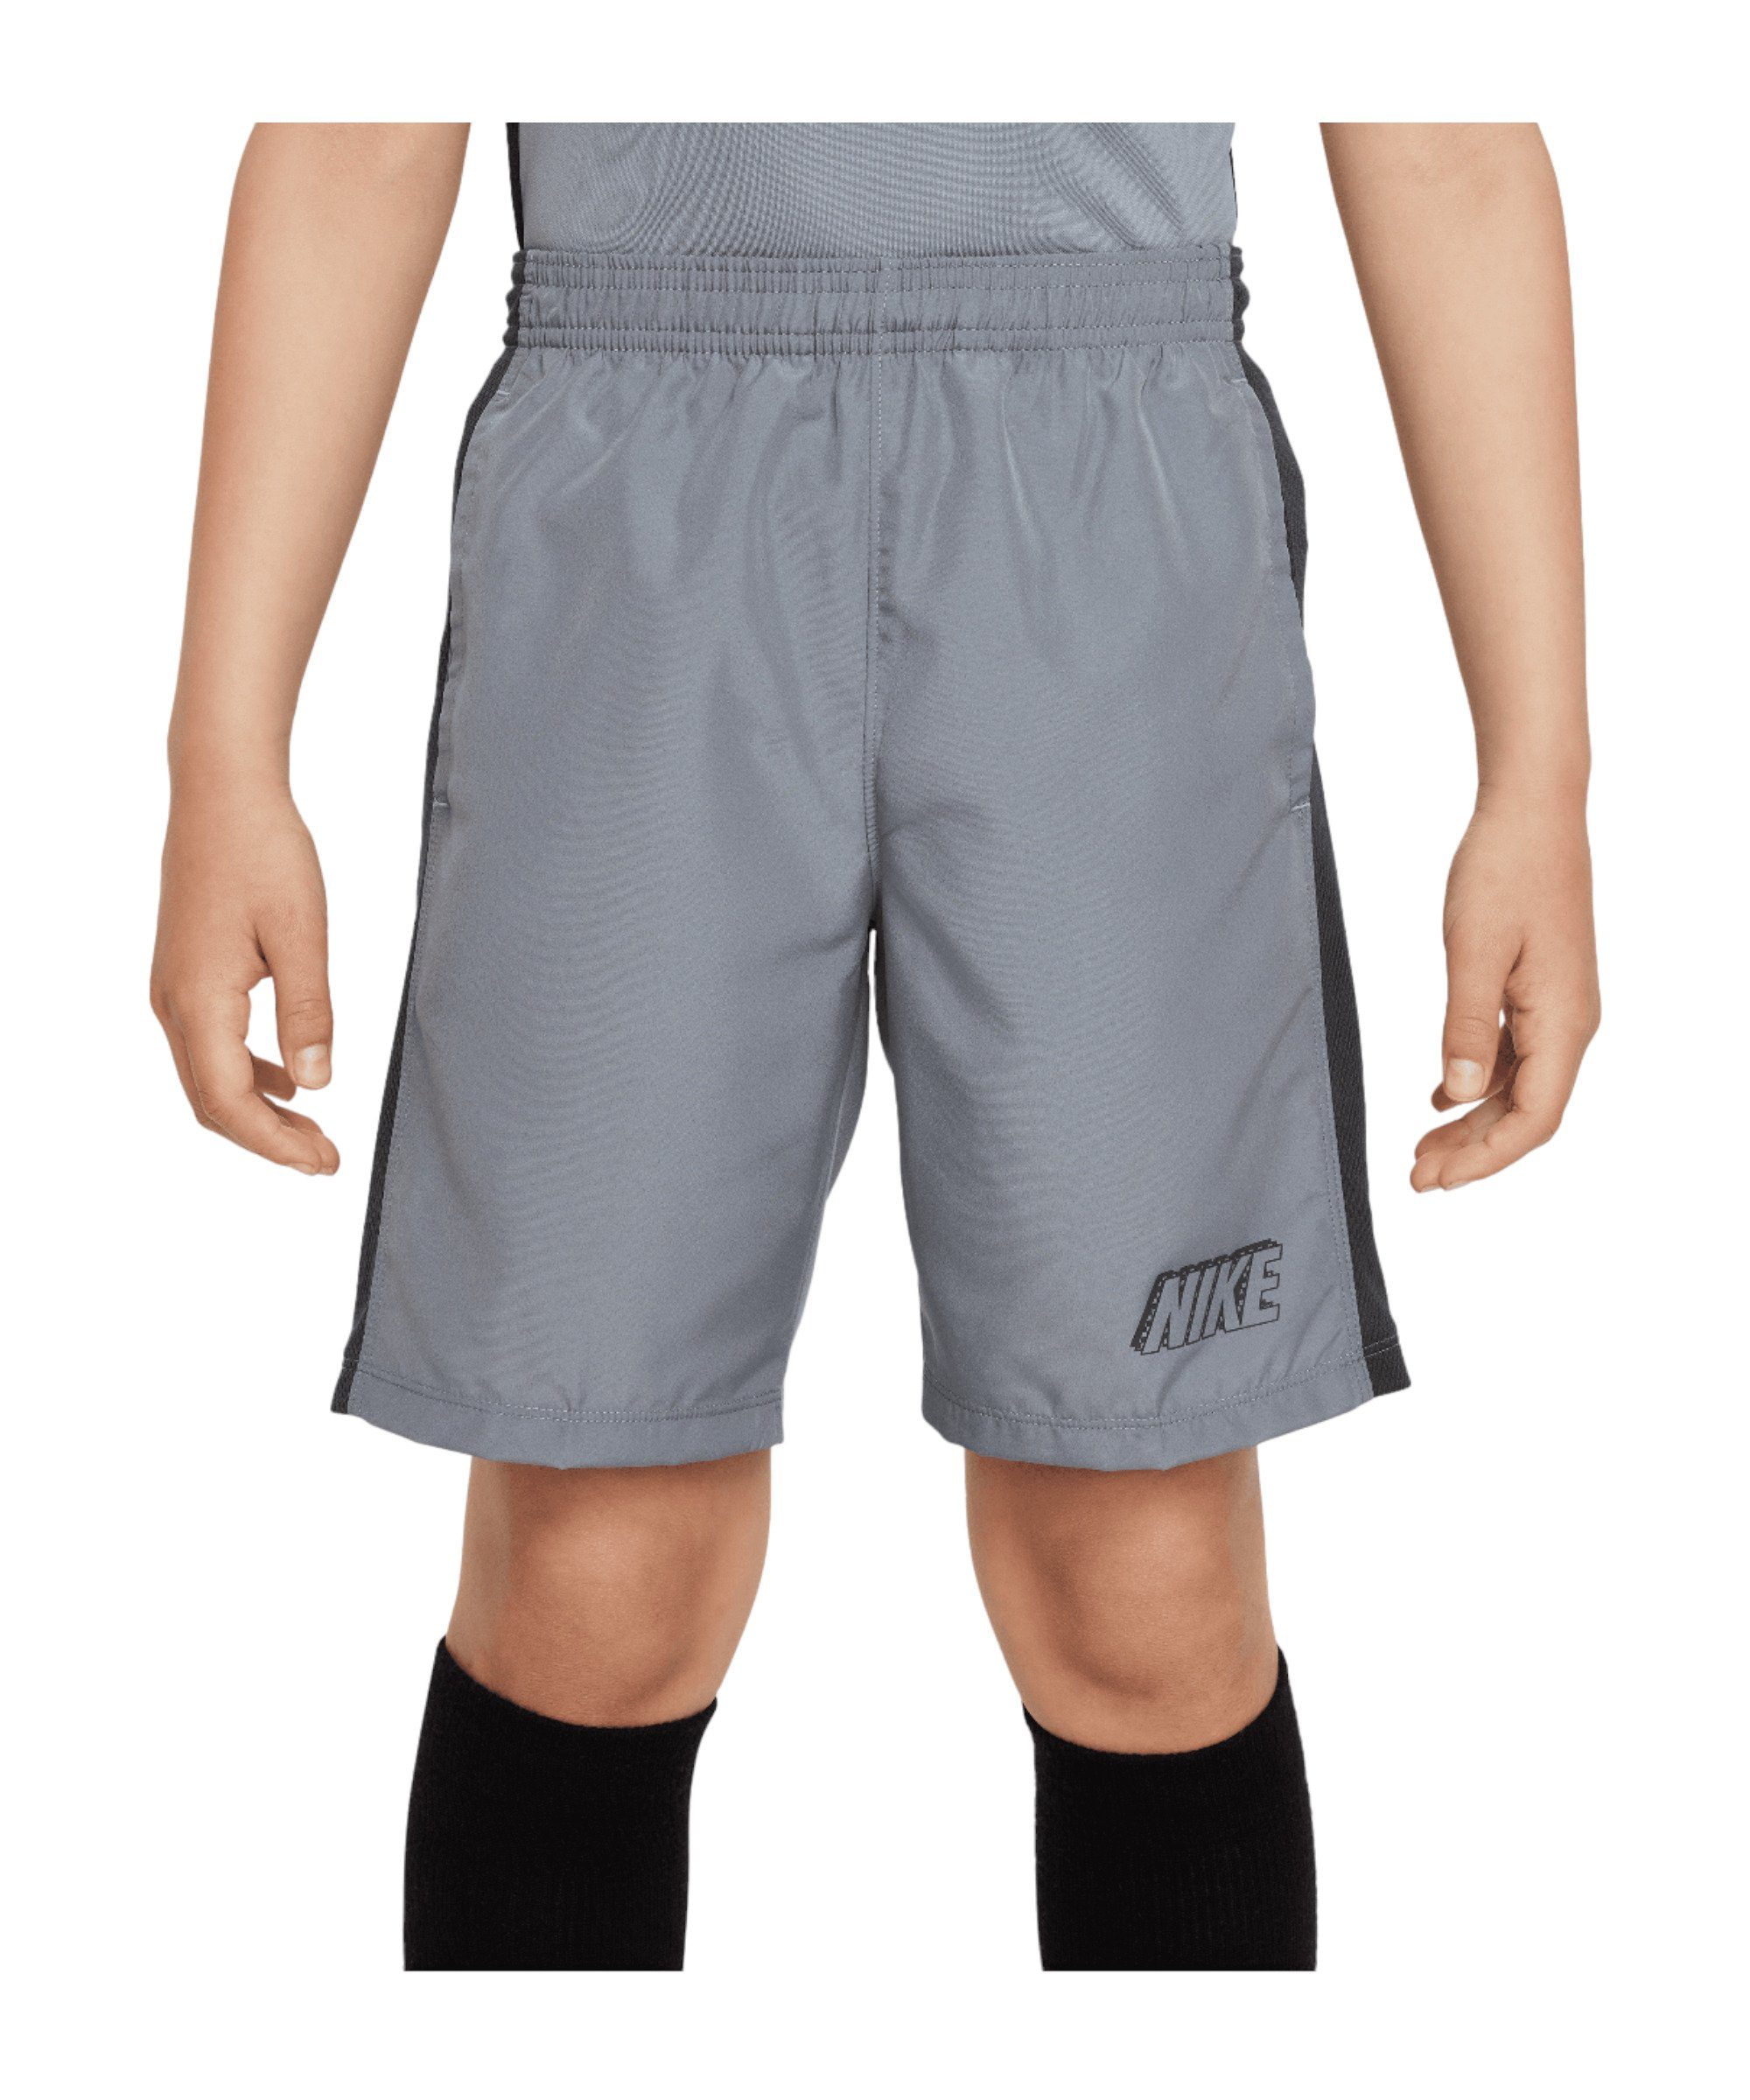 Shorts graugraugrau Kids Academy Sporthose 23 Nike